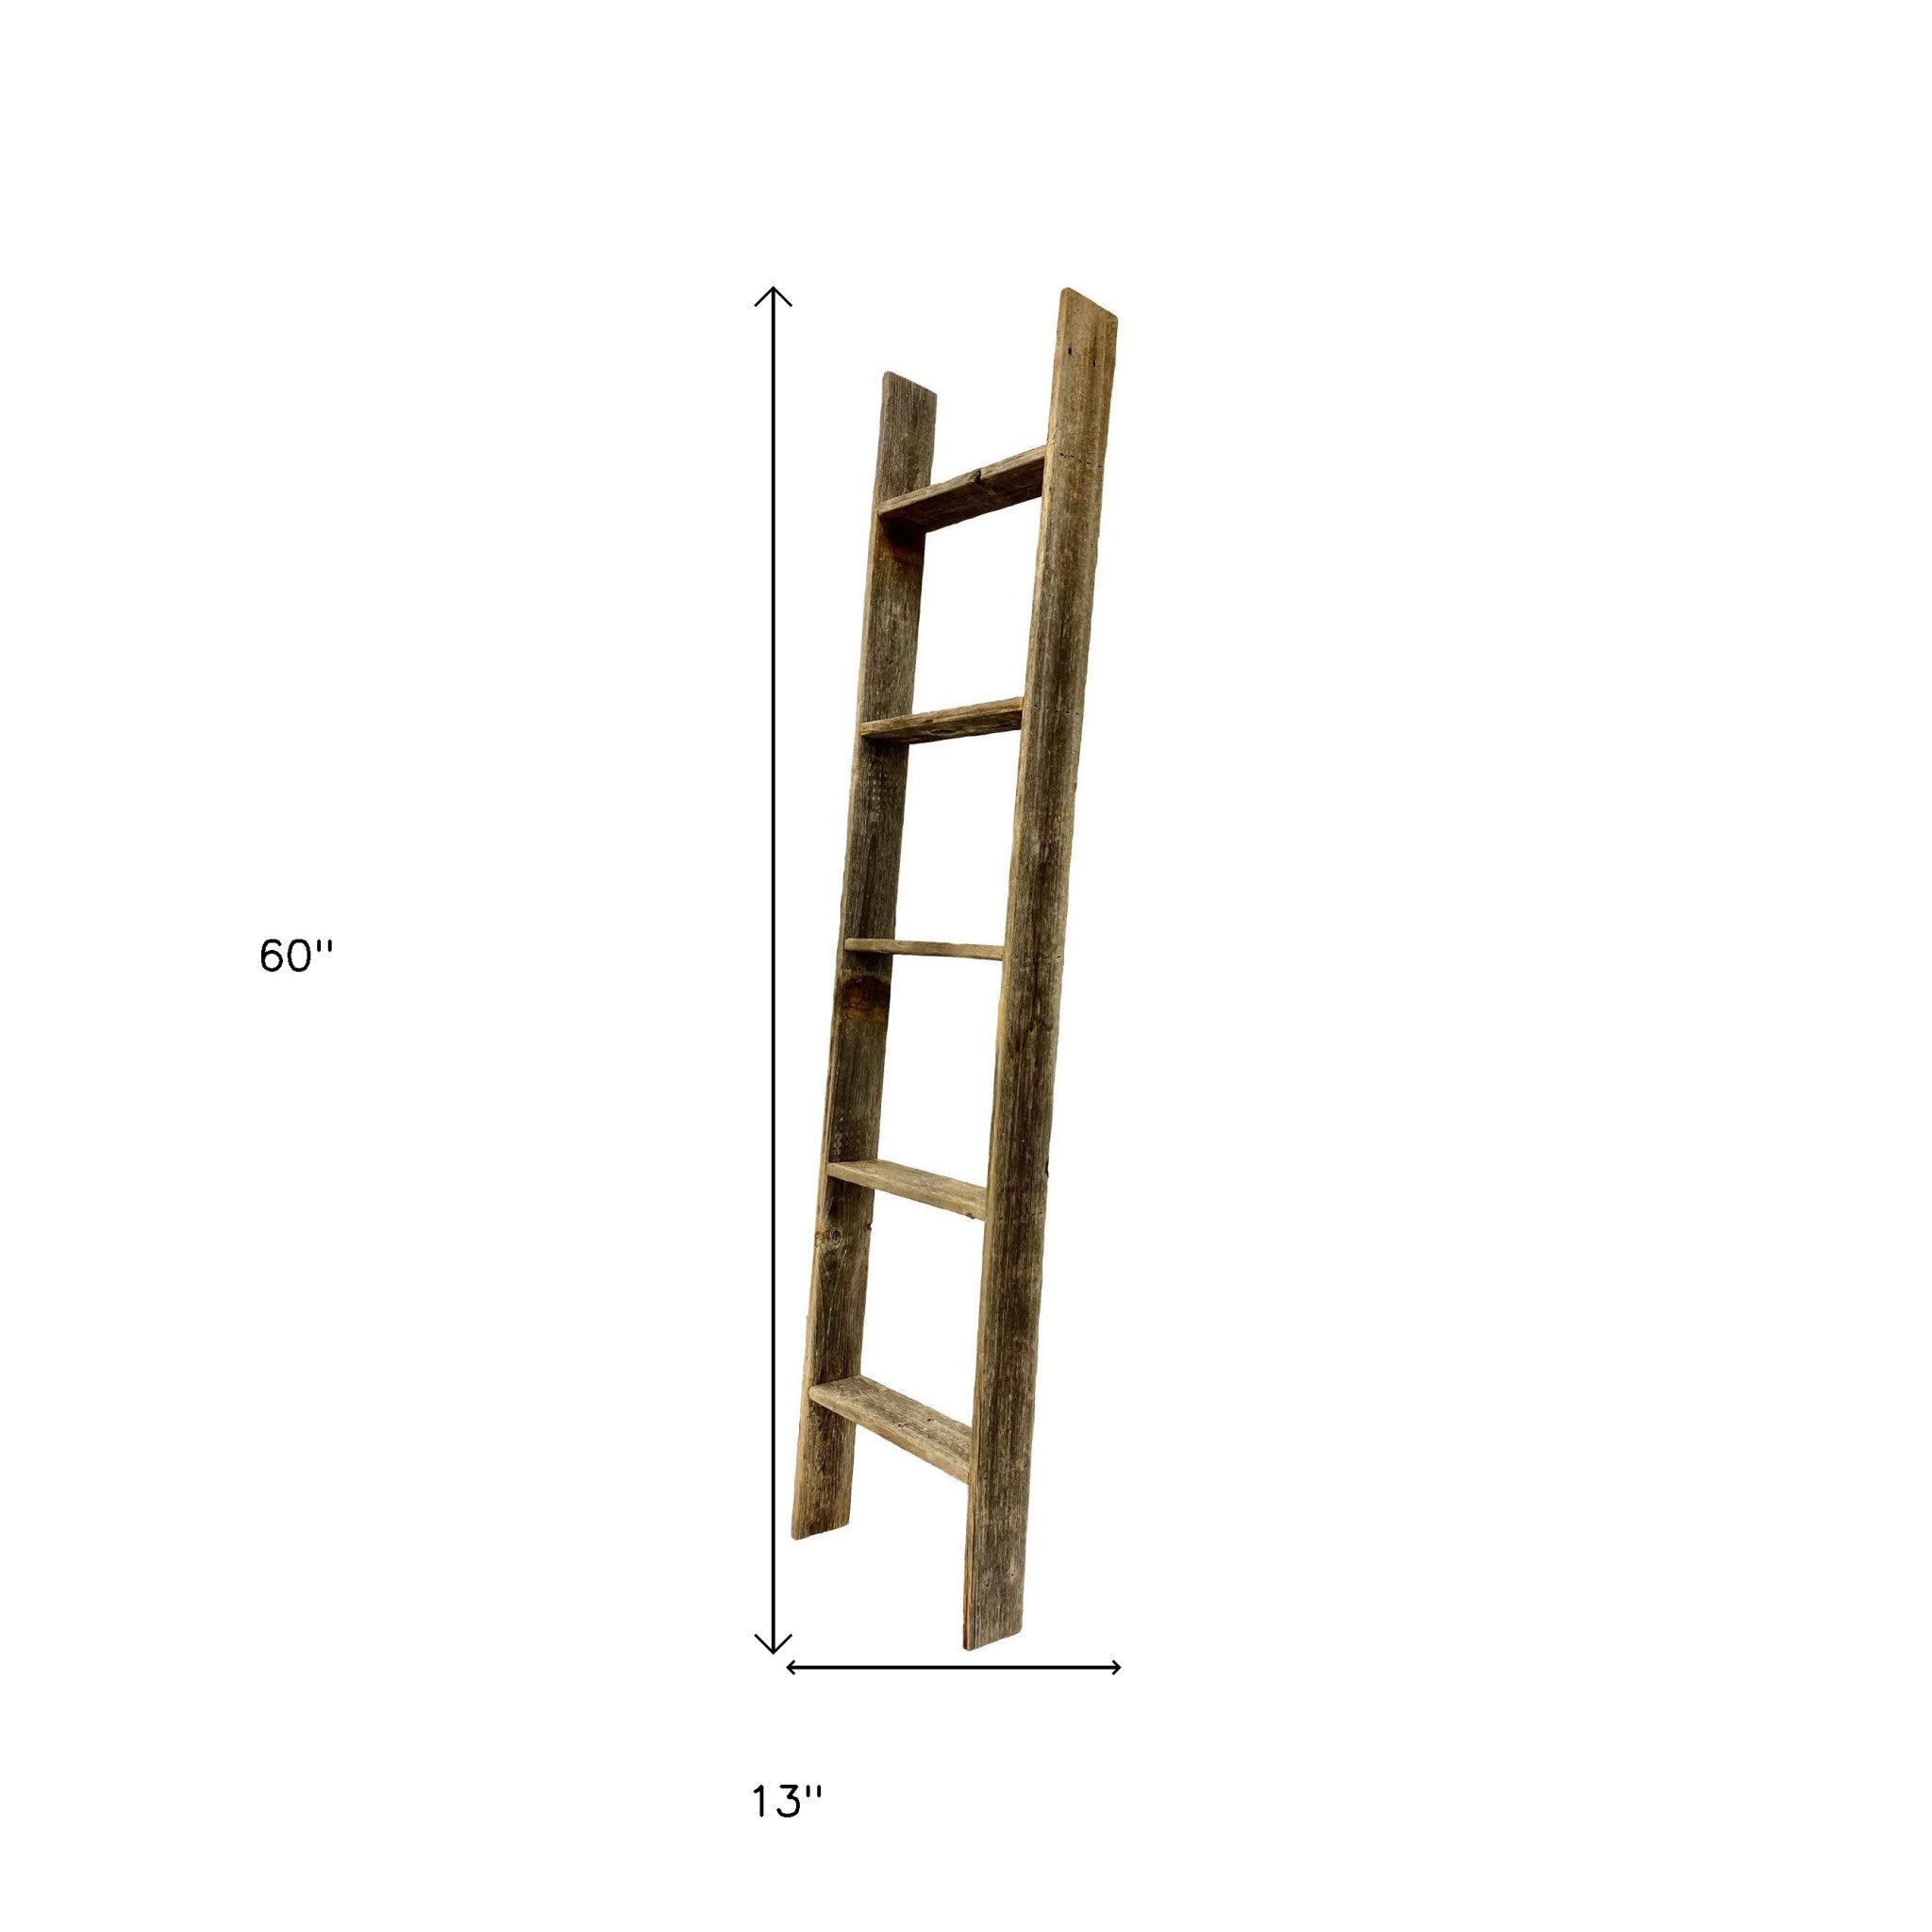 4 Step Rustic Weathered Grey Wood Ladder Shelf